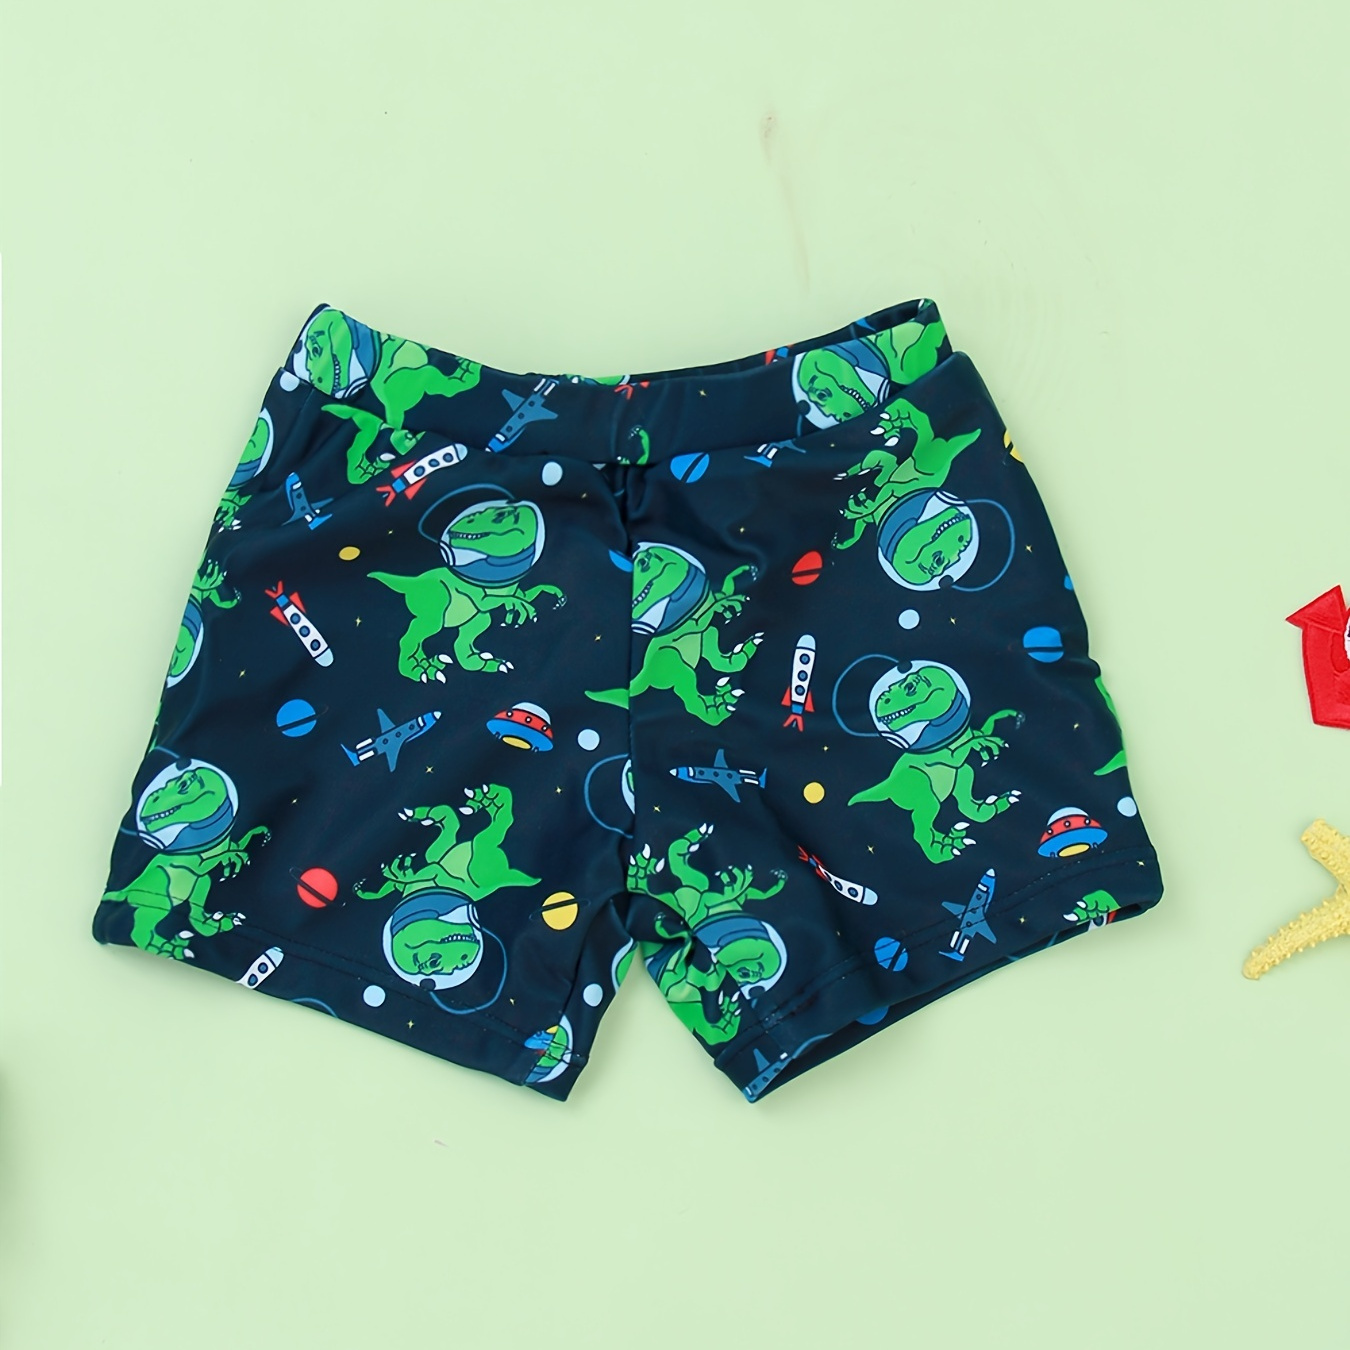 Boys Dinosaur Airplane And Rocket Swimming Trunks Shorts Bottoms ...